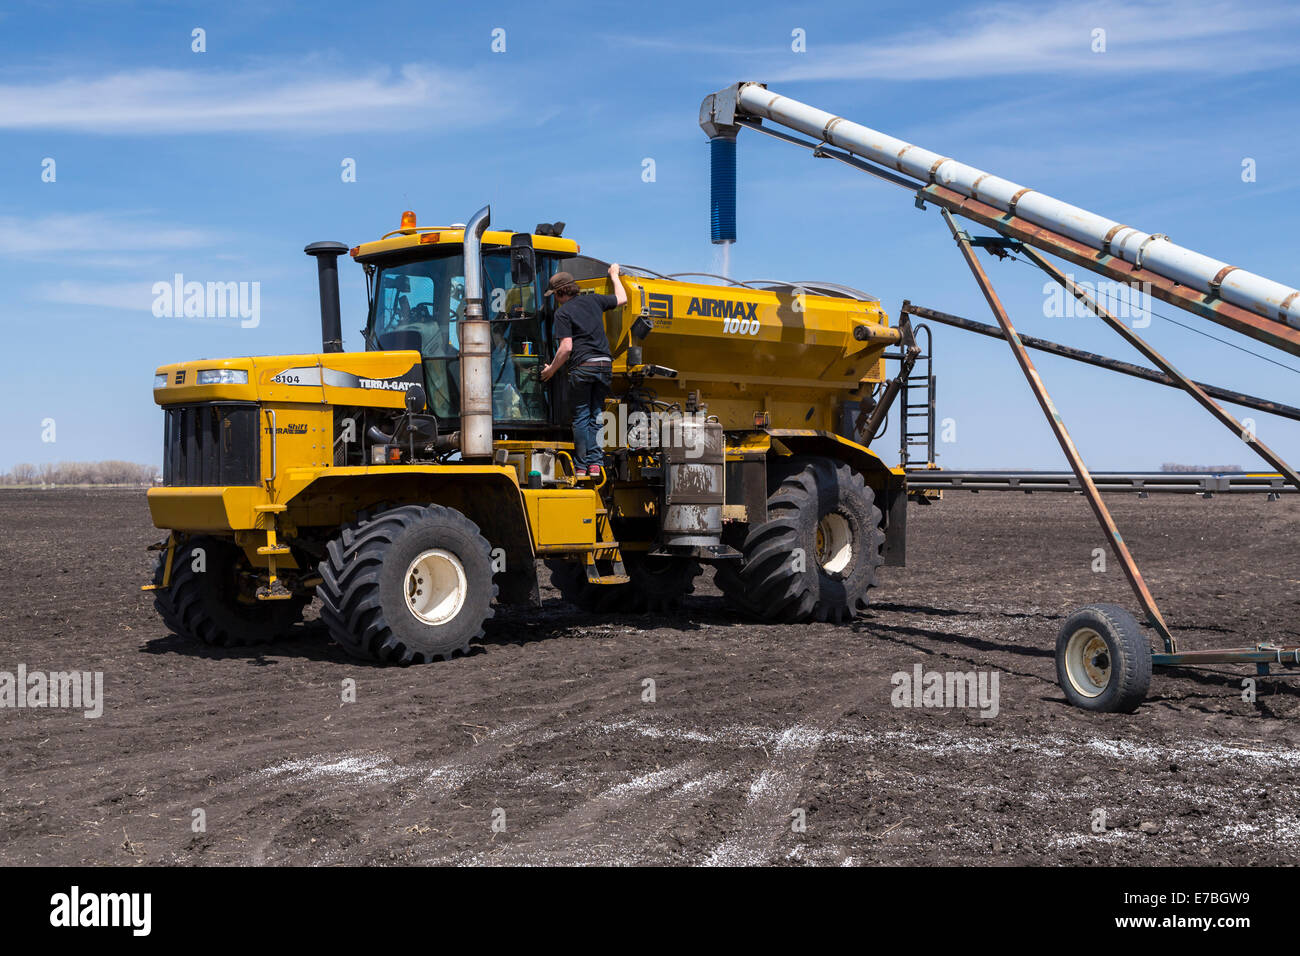 Loading the AirMax 1000 Terra-Gator fertilizer spreader on the Froese farm near Winkler, Manitoba, Canada. Stock Photo